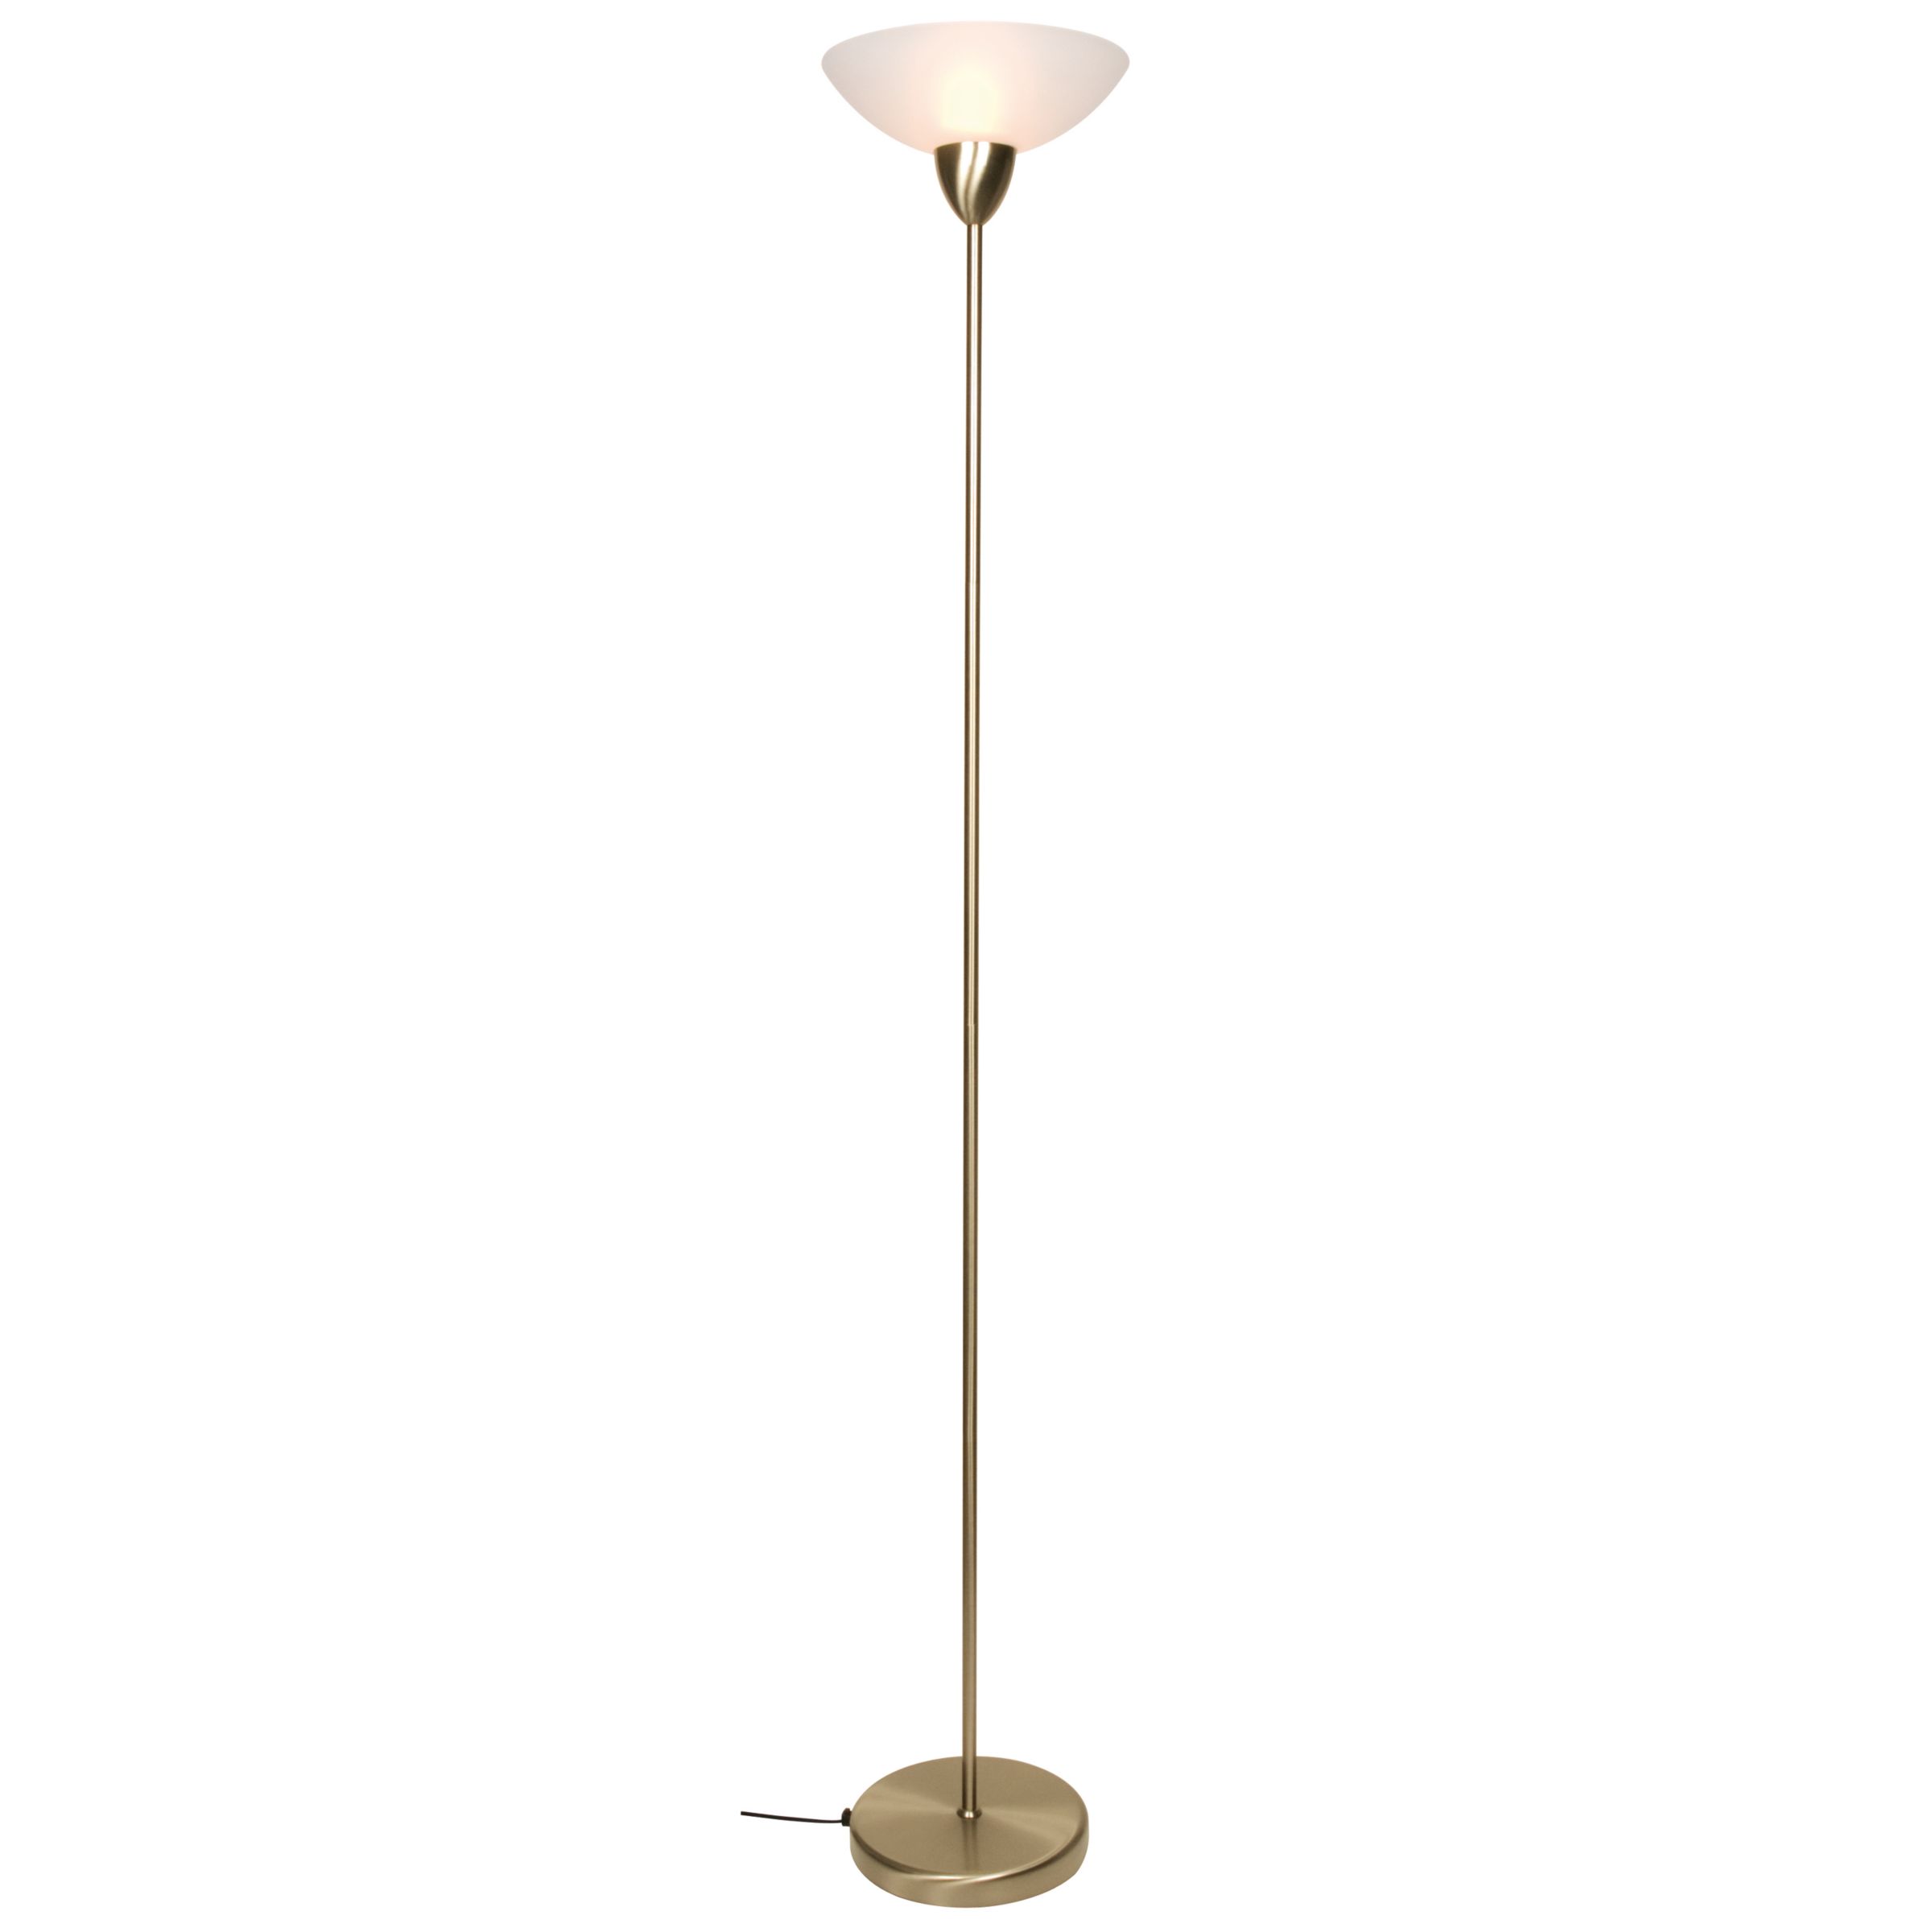 John Lewis Darlington Floor Lamp, Antique Brass